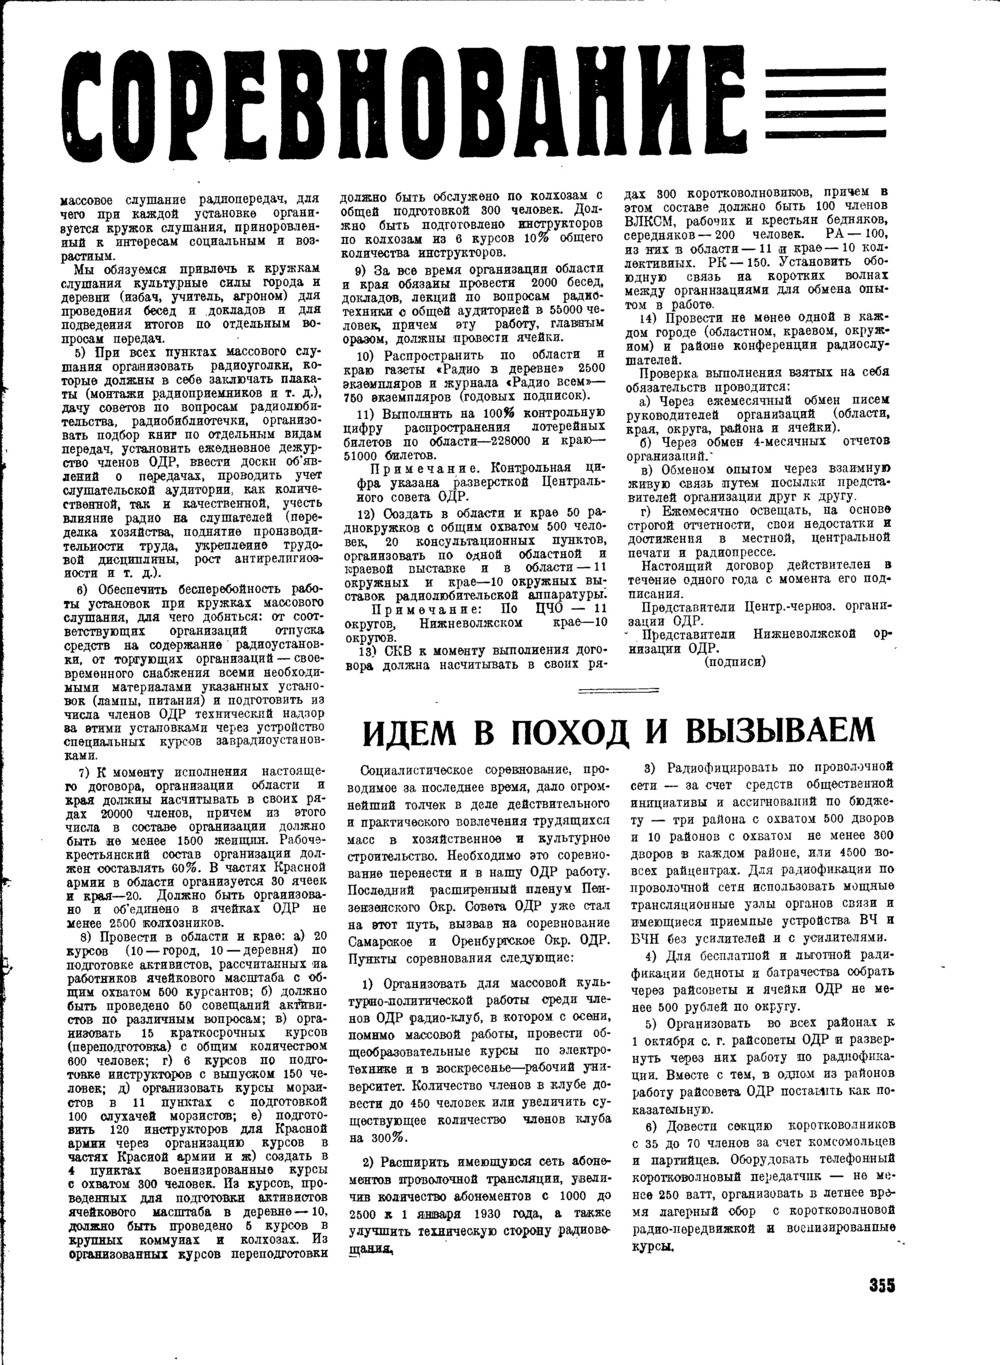 Стр. 3 (355) журнала «Радио всем» № 13 за 1929 год